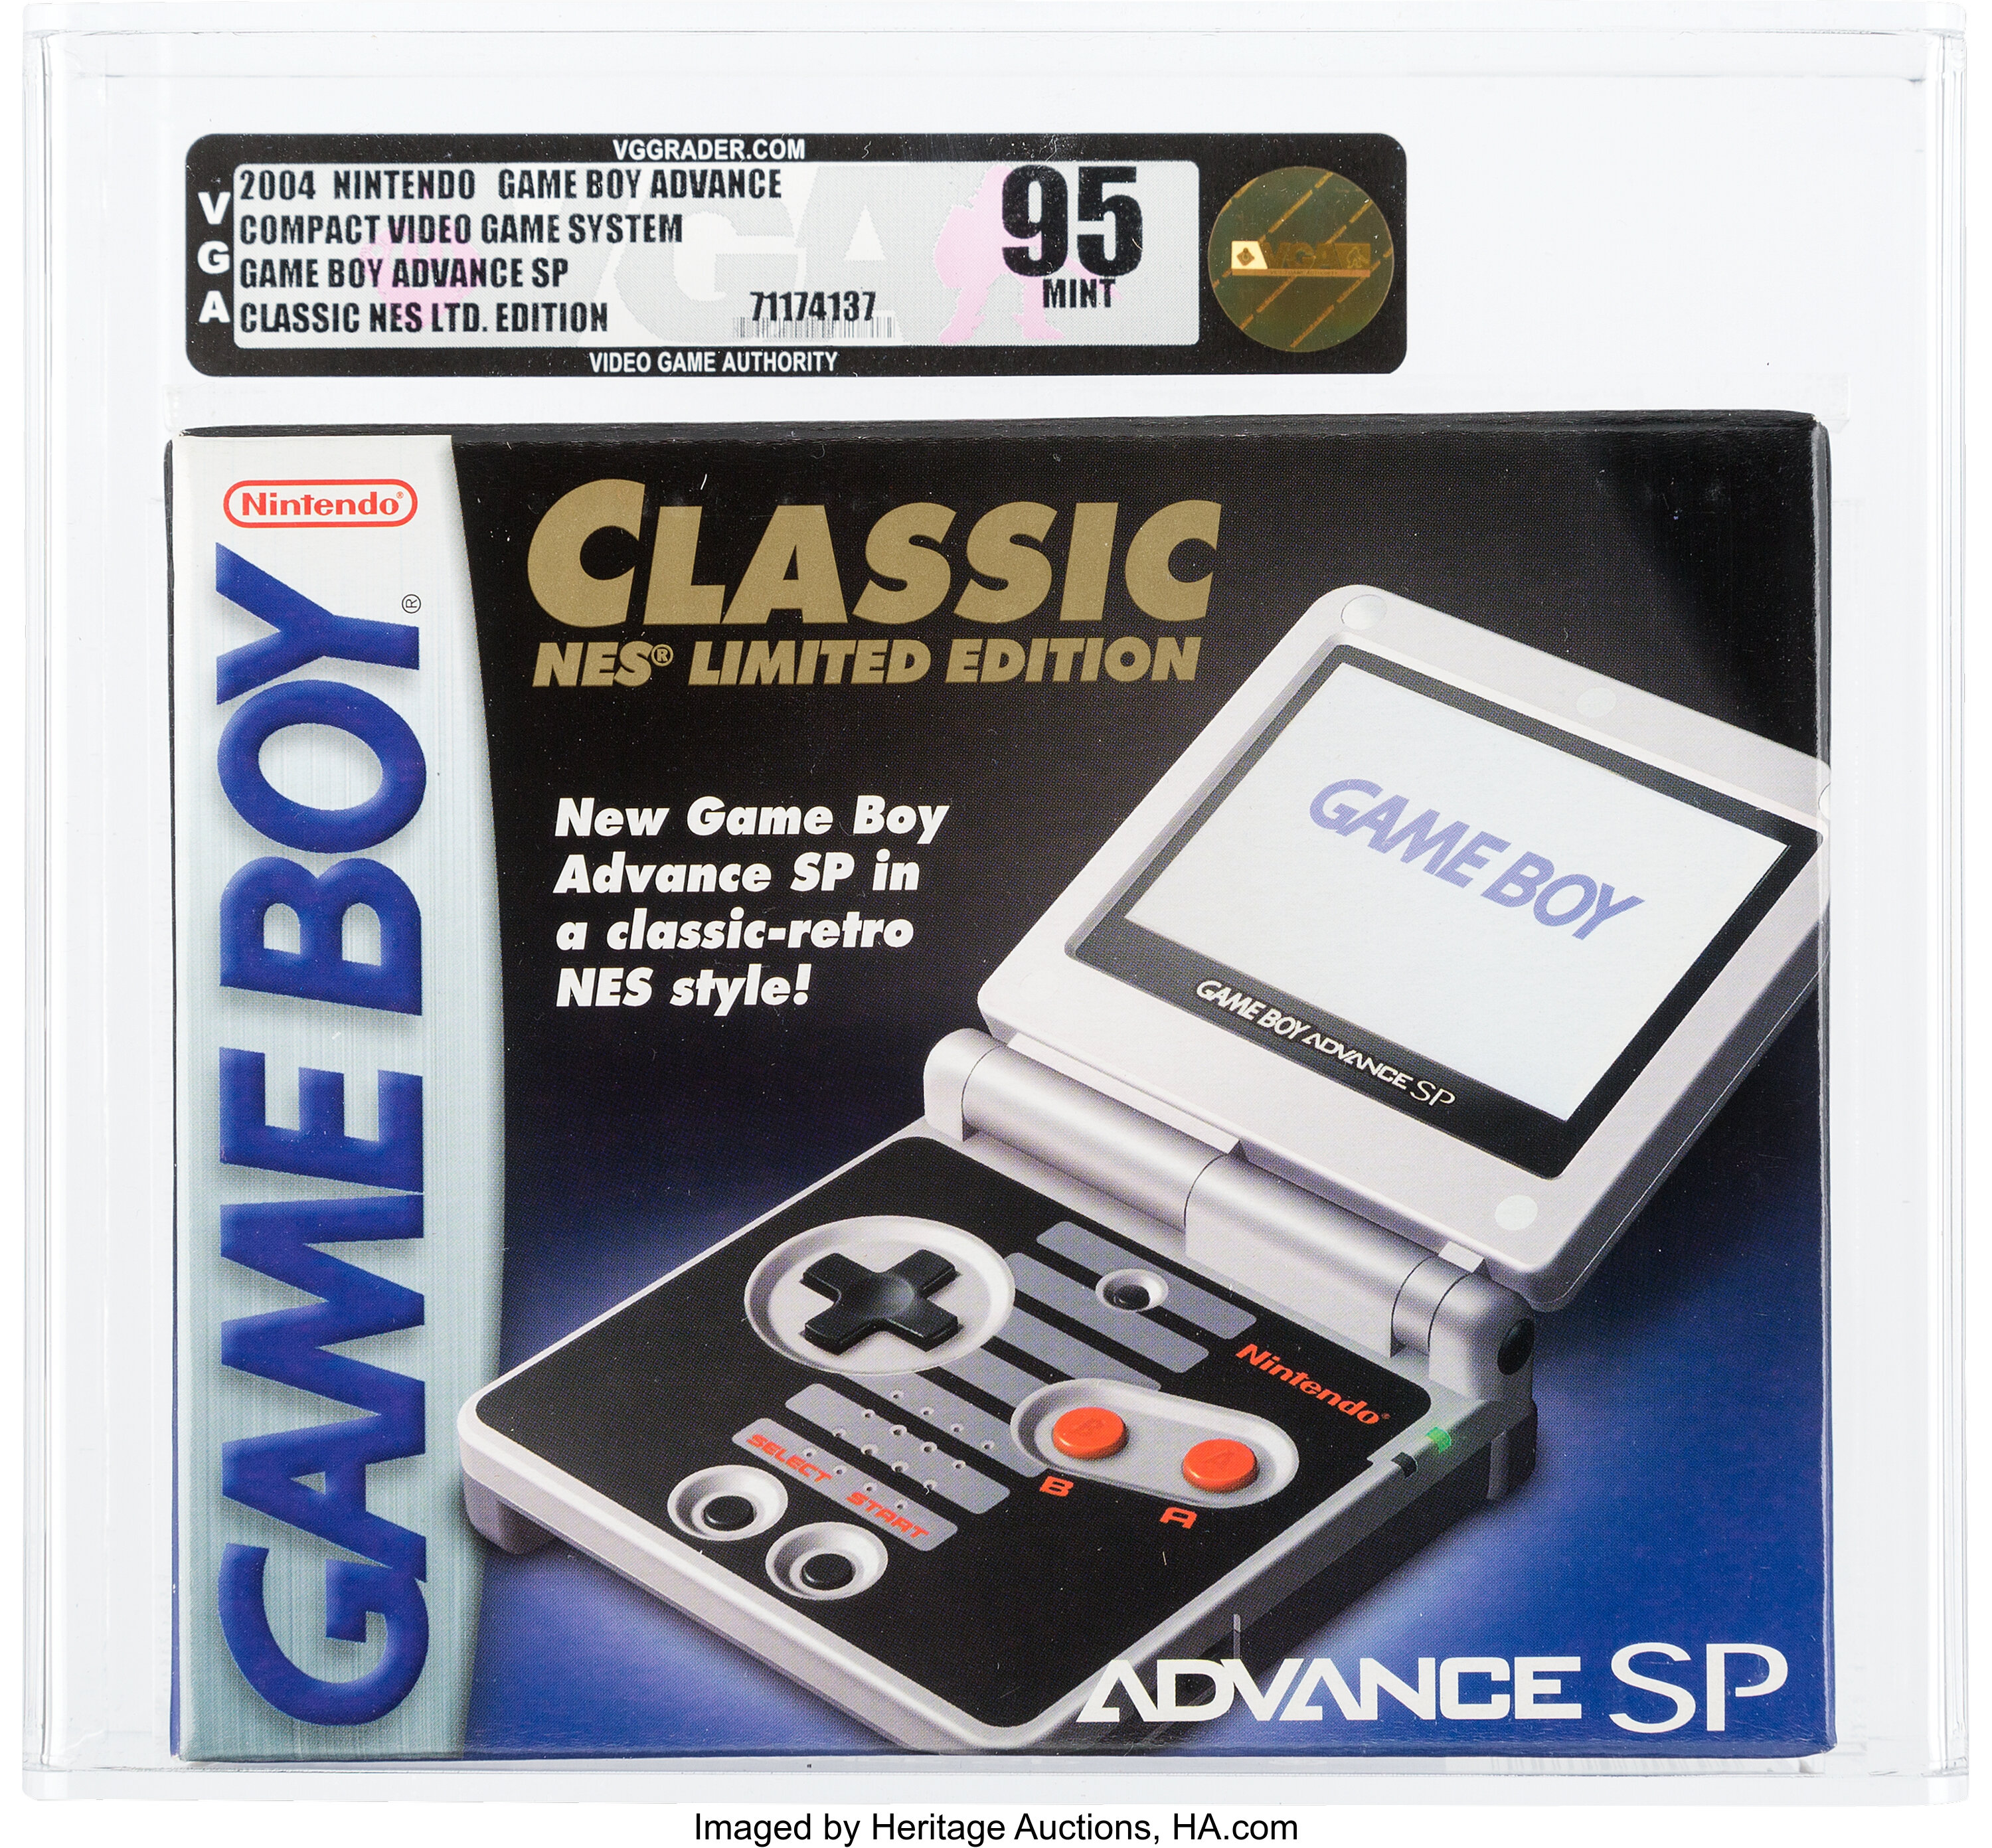 Nintendo boy advance. Нинтендо геймбой Advance. Nintendo Advance SP. Nintendo game boy Advance SP. Game boy Advance SP NES Edition.